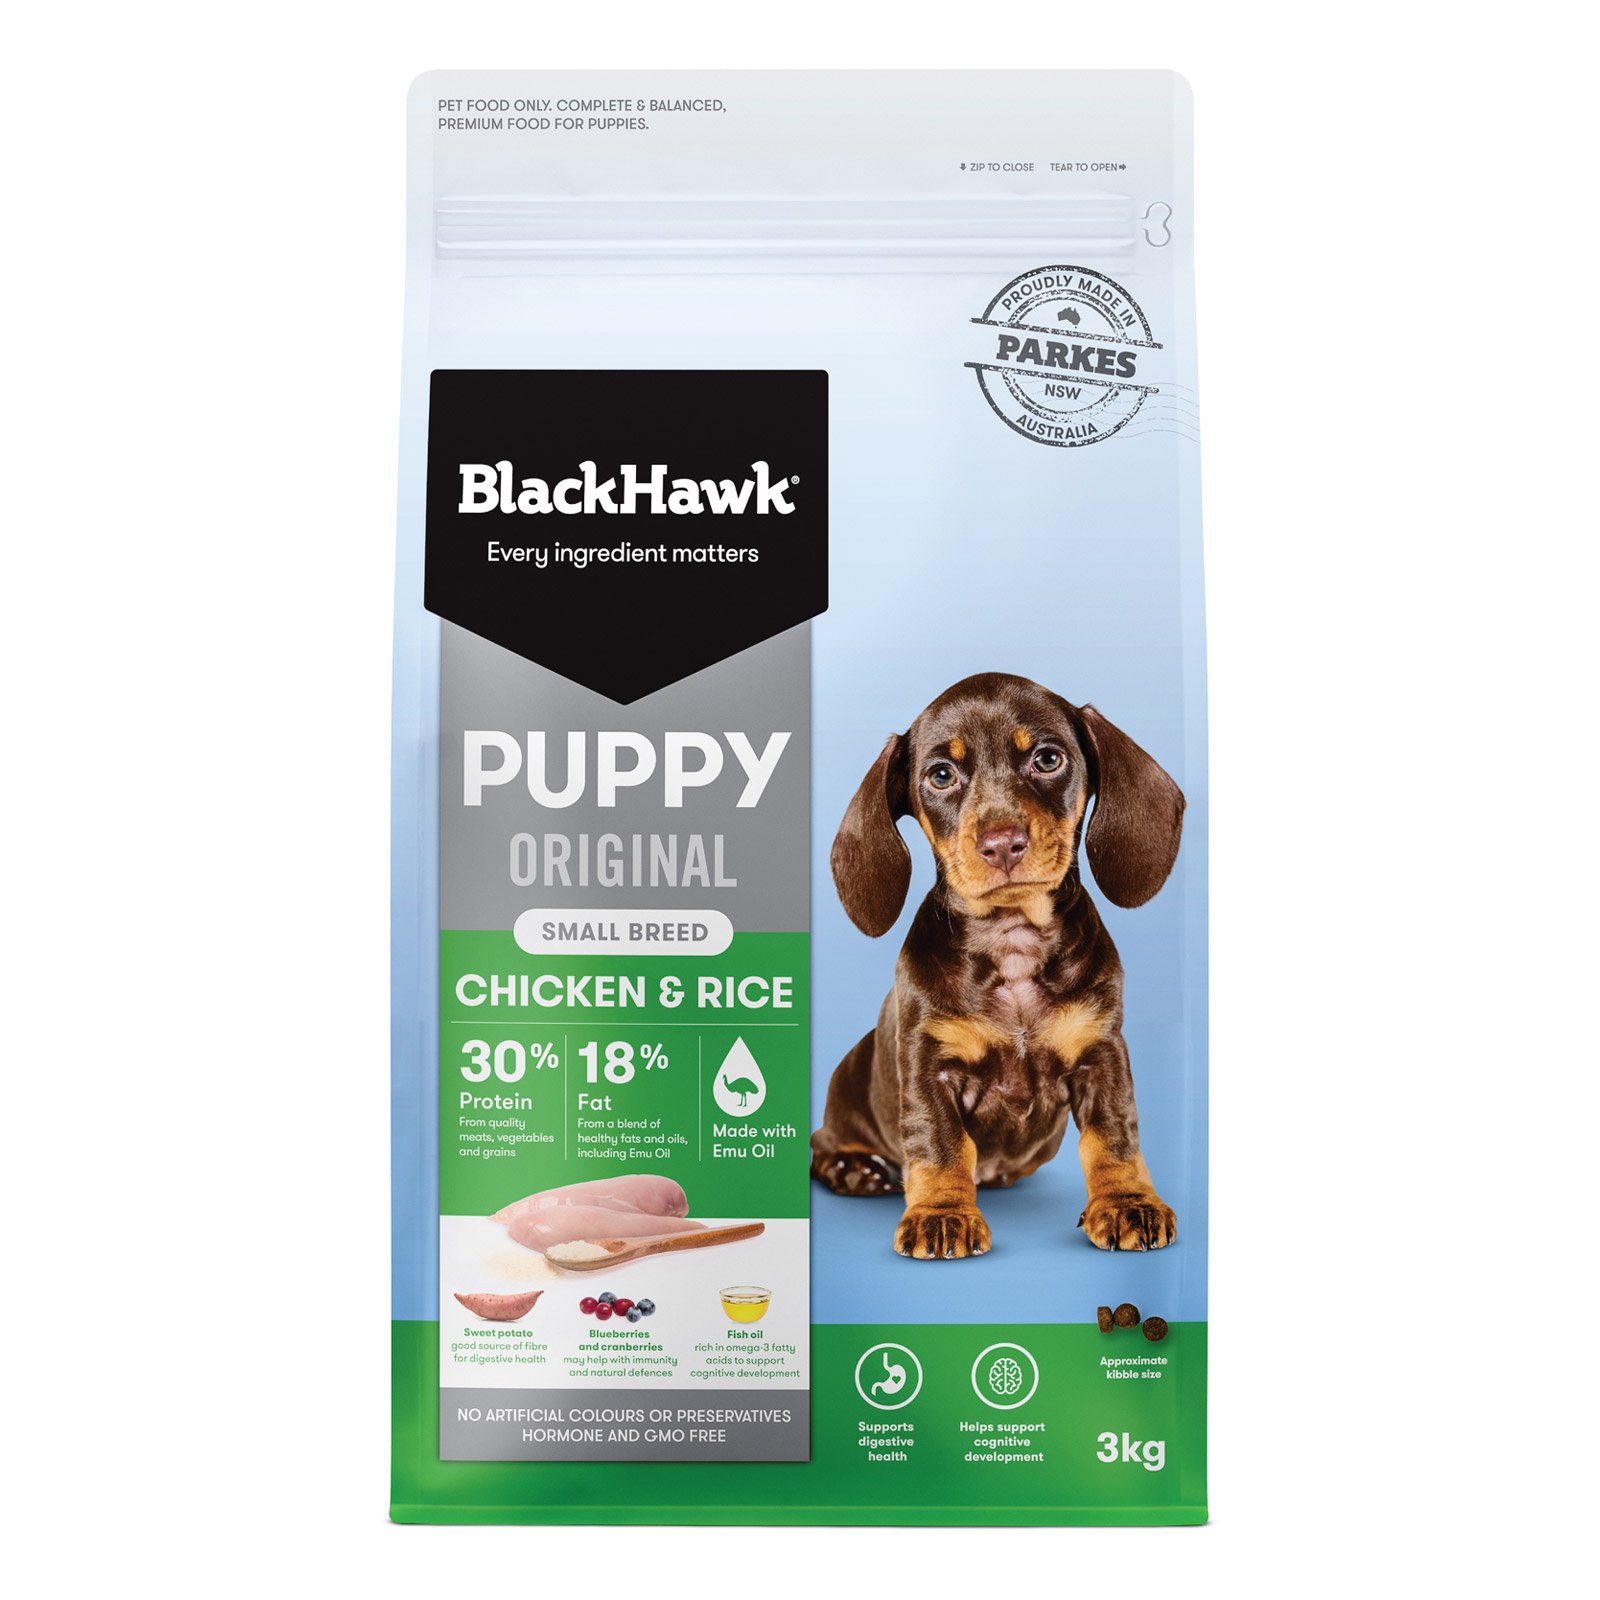 Black Hawk Puppy Original Small Breed Chicken and Rice